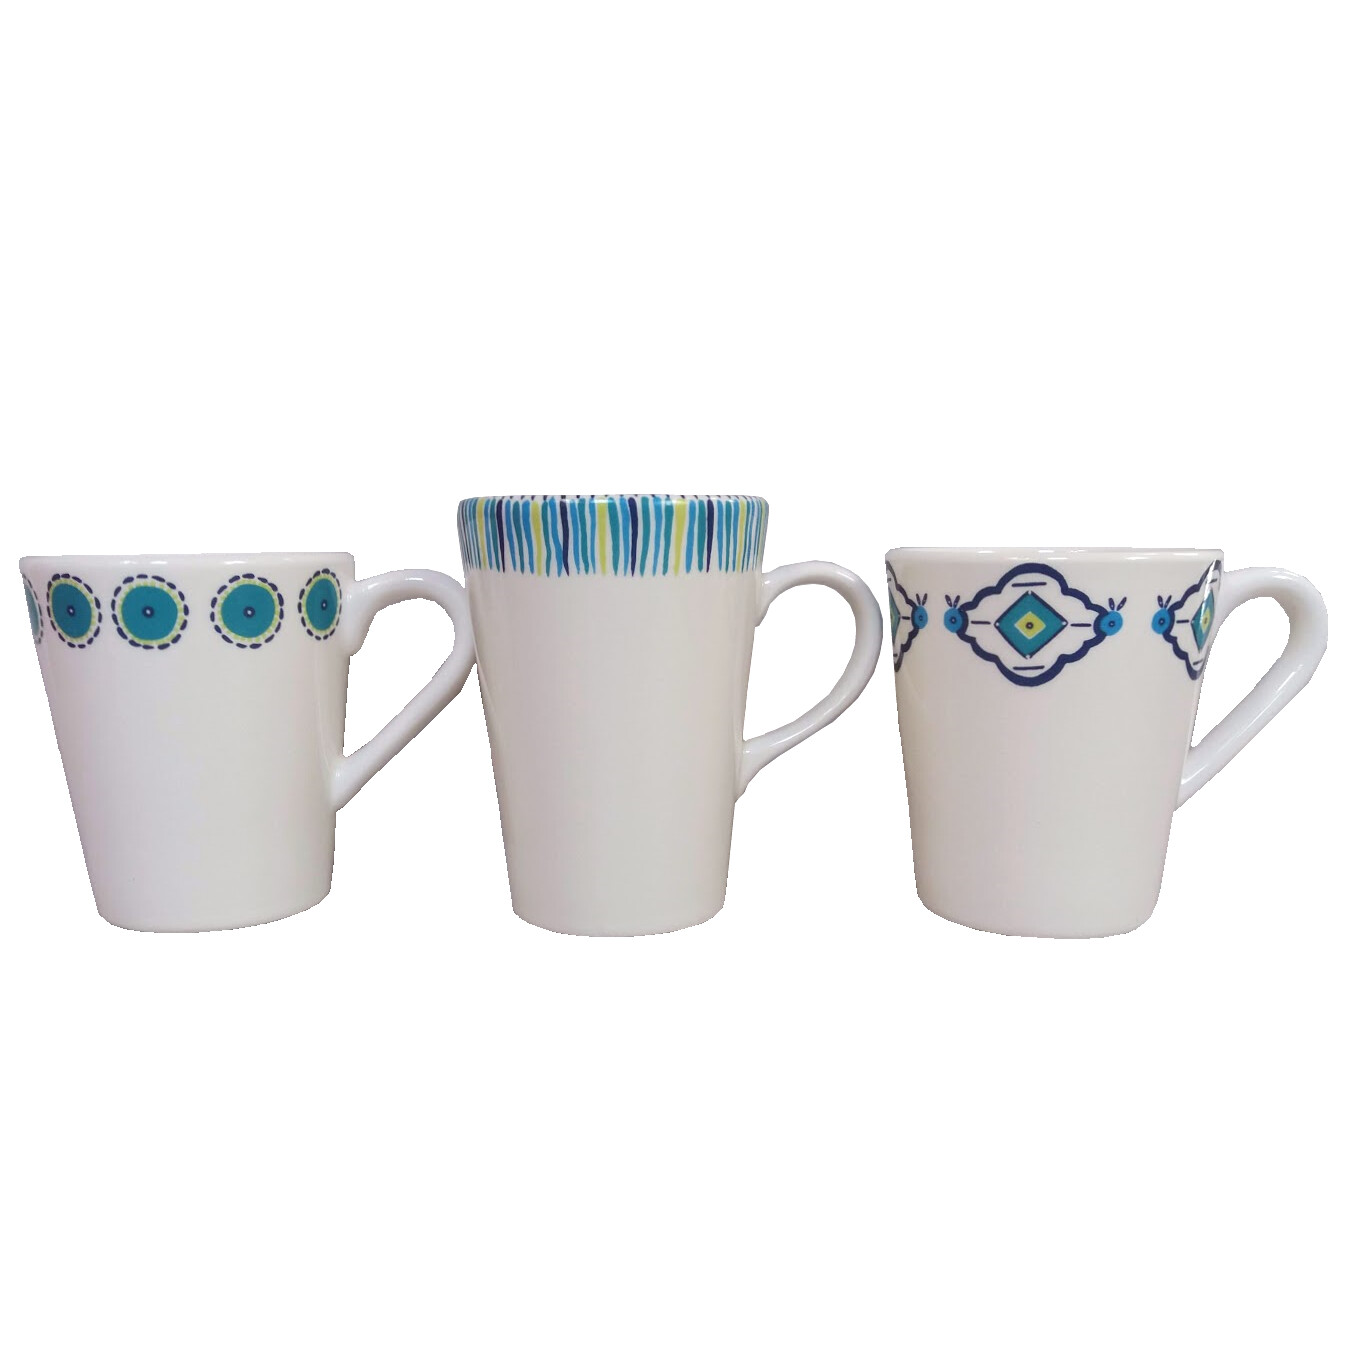 PENZO’s “Alhambra” Coffee Mugs Set of 3